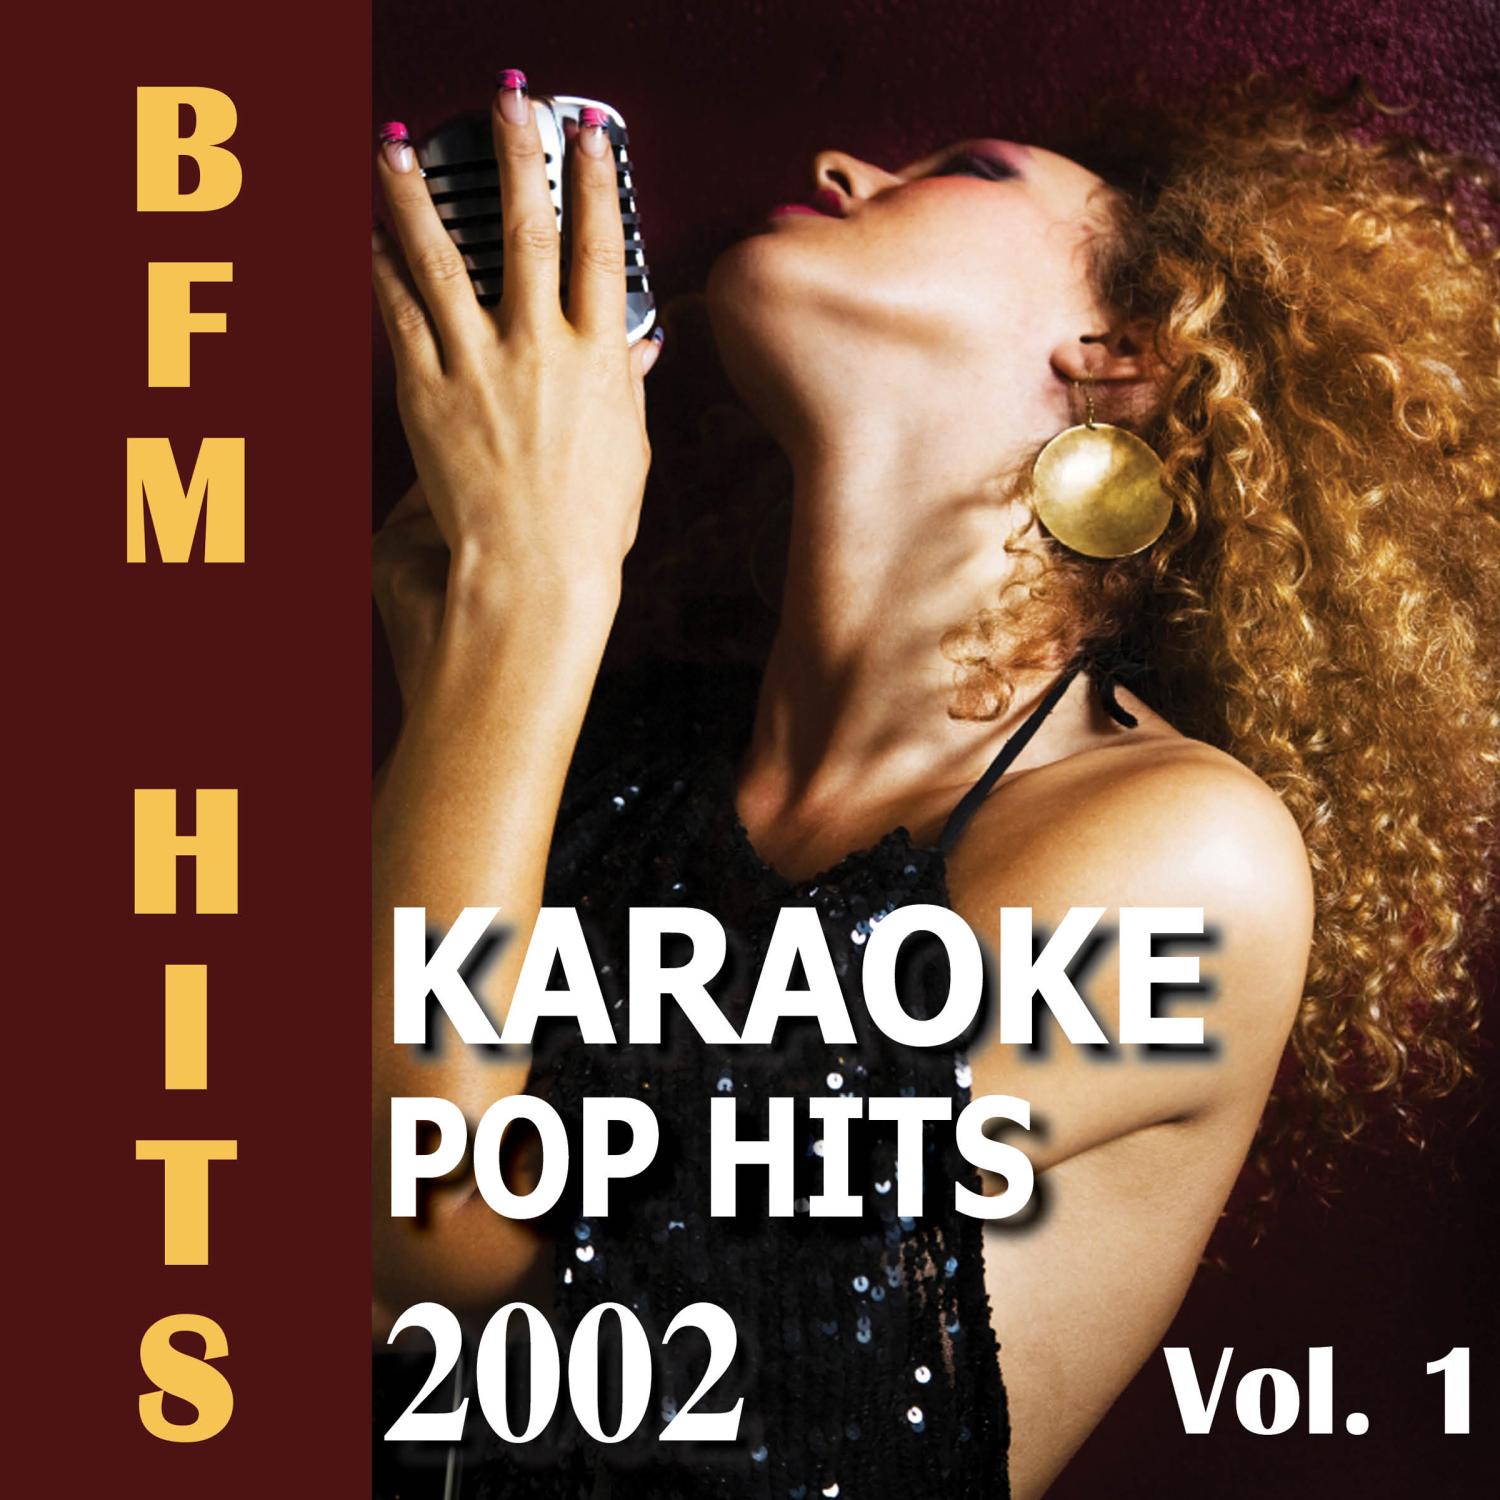 Karaoke: Pop Hits 2002, Vol. 1